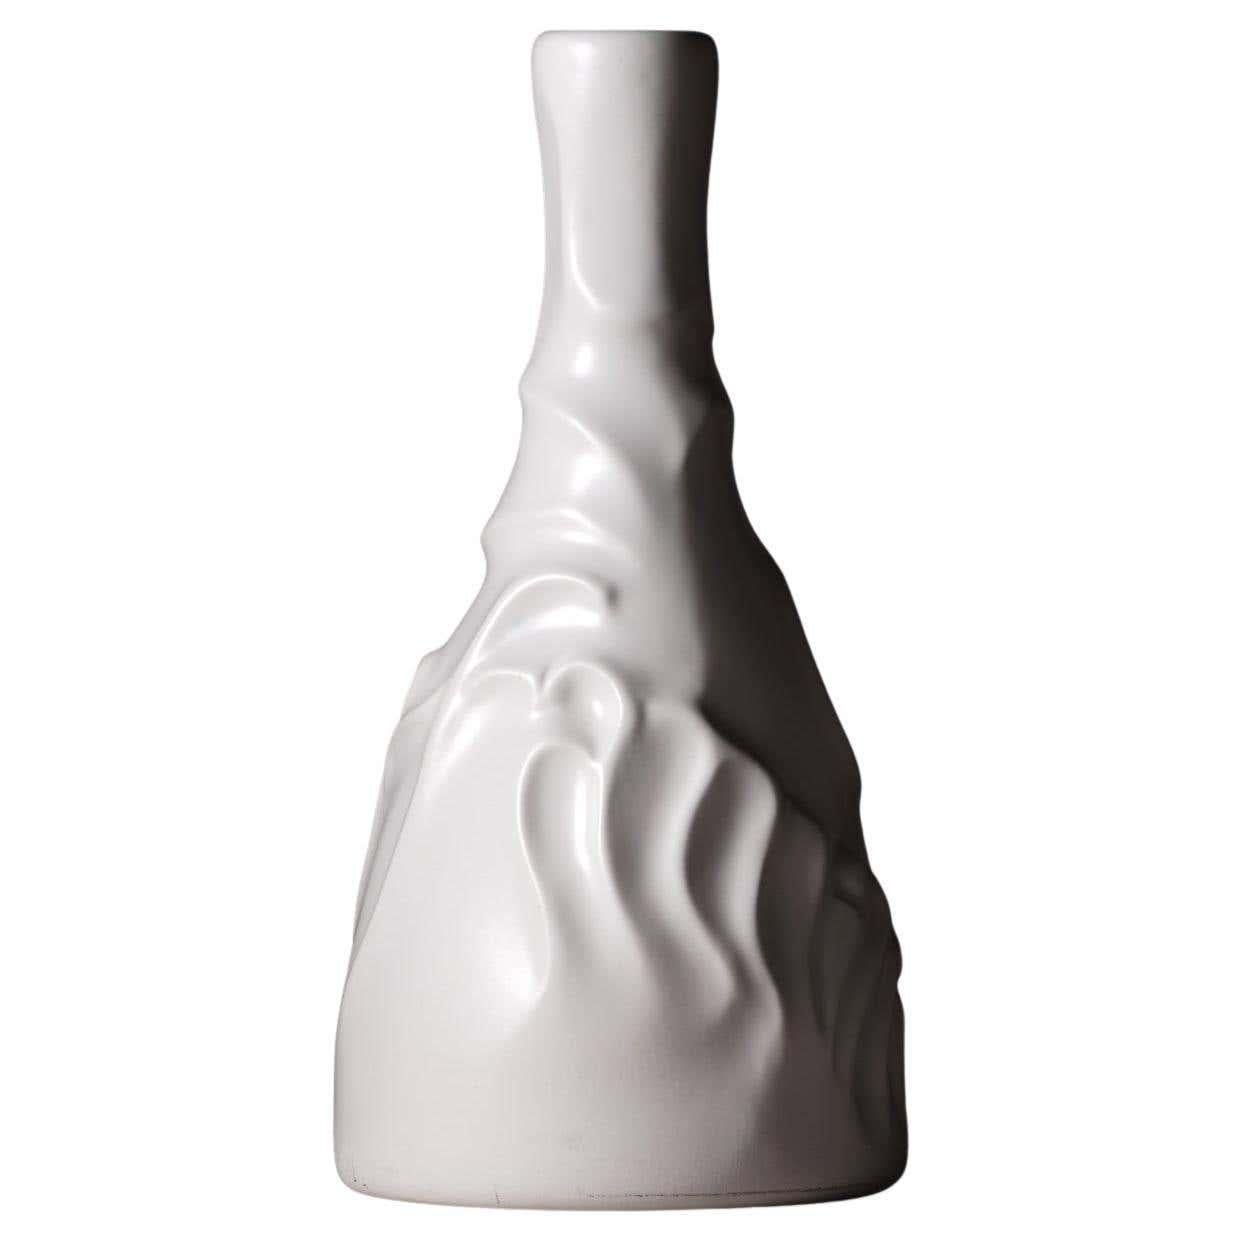 Early 19th Century White Ceramic Casa De Familia Bottle Vase by Josep Maria Jujol

Materials: 
Ceramic

Dimensions: 
Diam. 35.56 cm x H 71.12 cm

The architect Josep Maria Jujol was Antoni Gaudí's closest collaborator. He designed the Casa